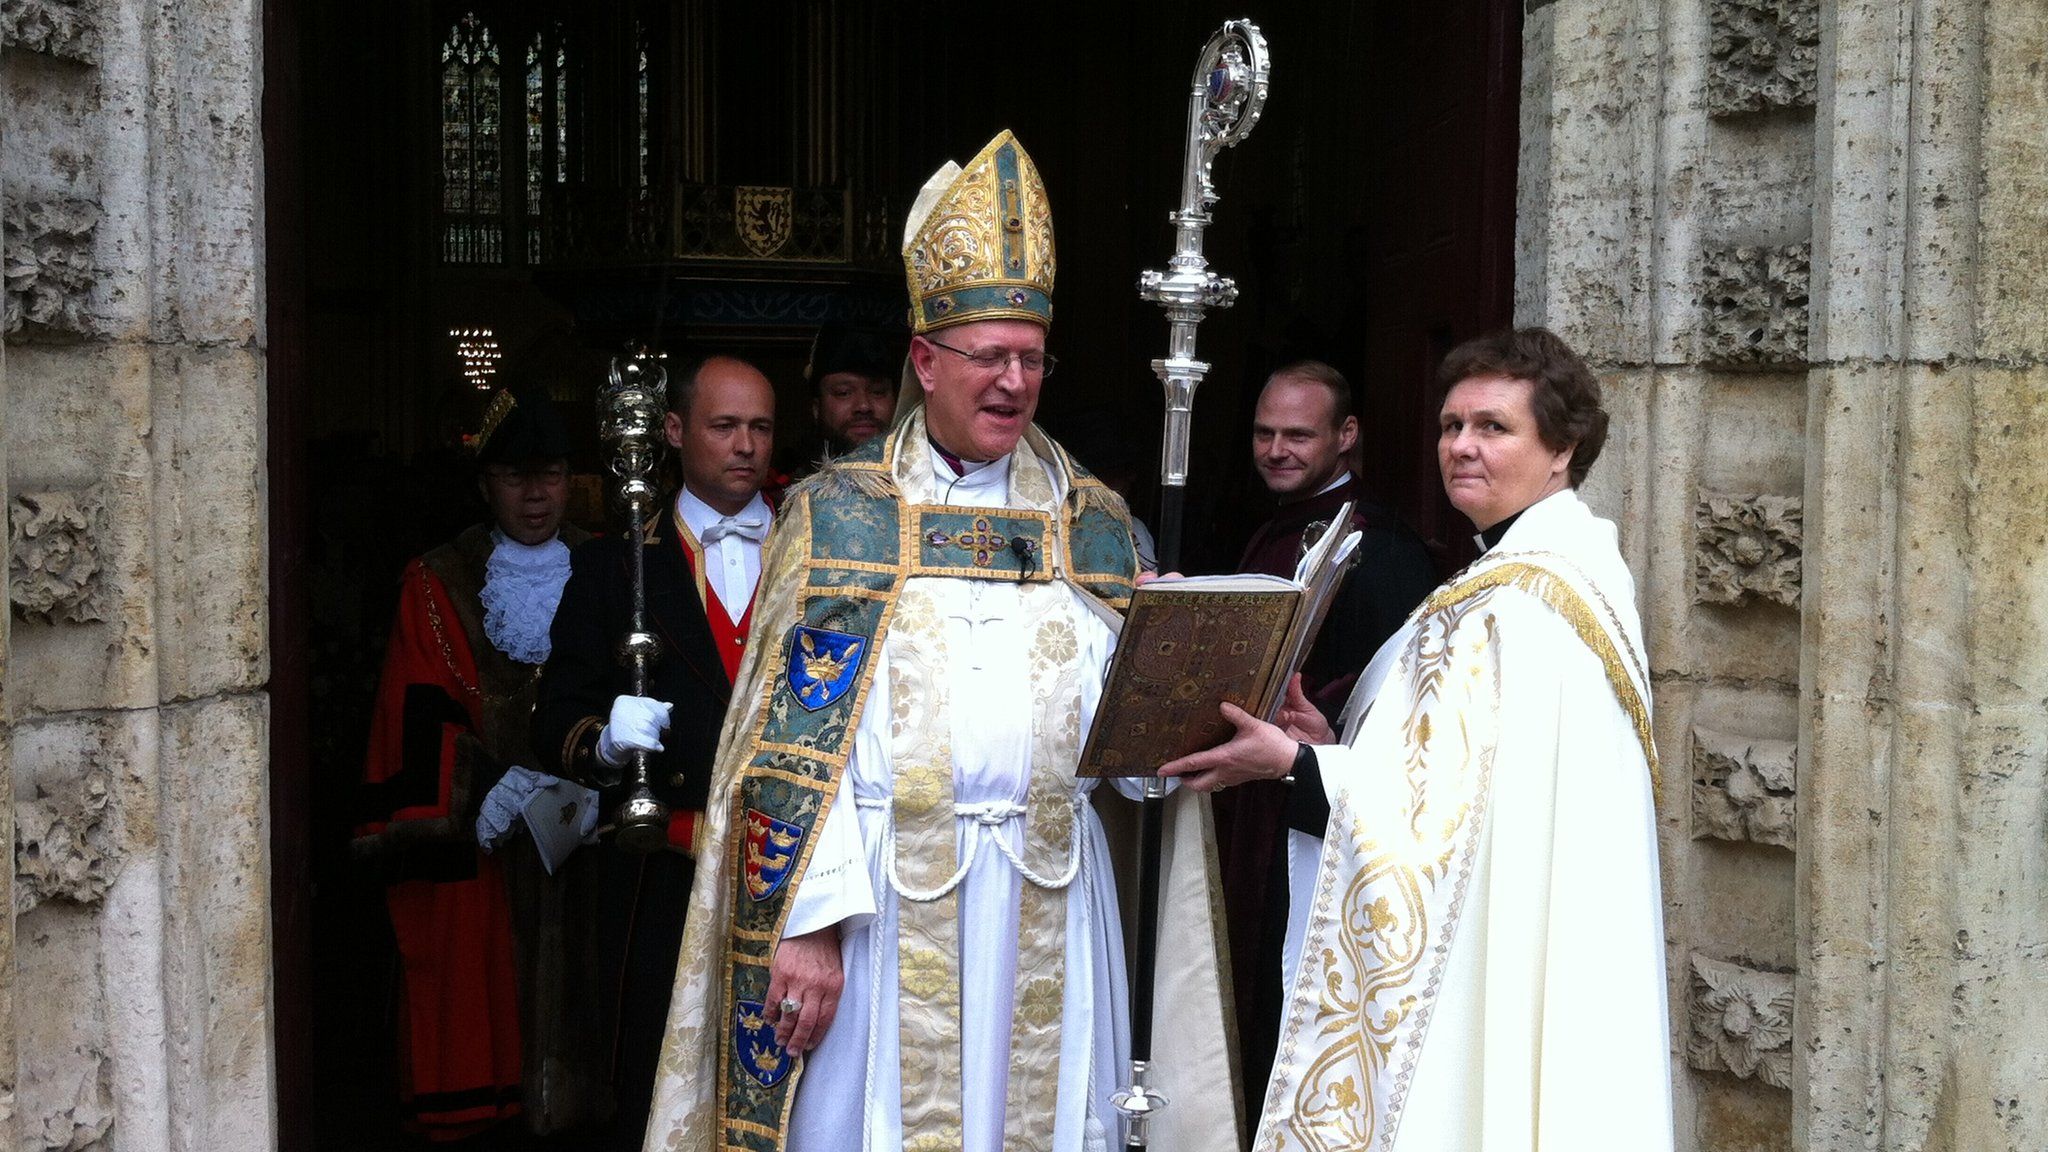 Bishop of St Edmundsbury, the Right Reverend Martin Seeley